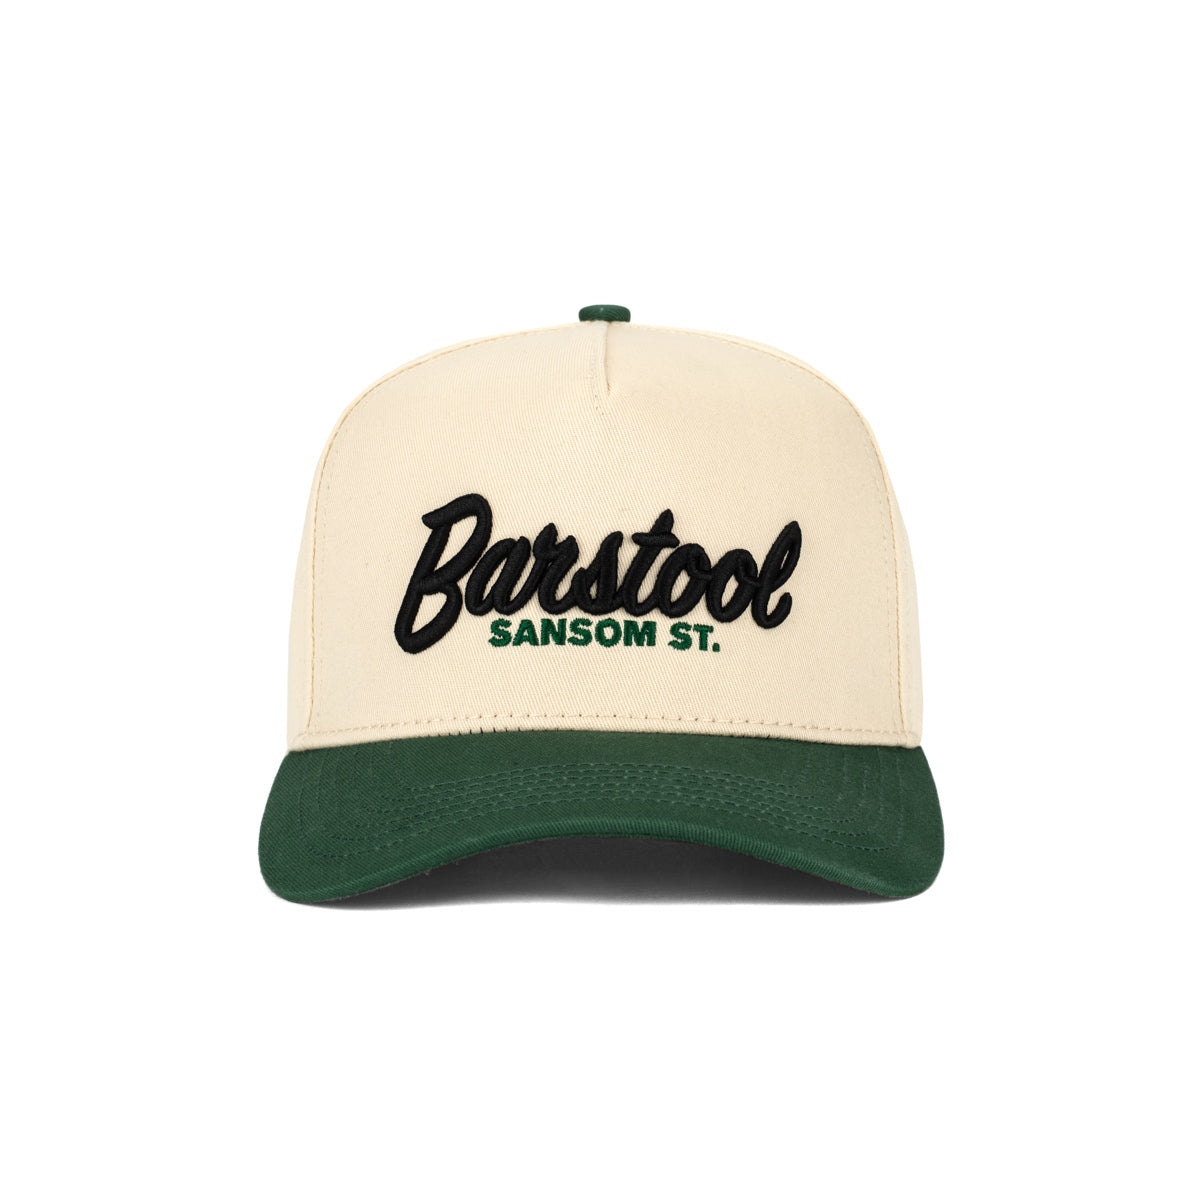 Barstool Sansom 5-Panel Baseball Hat-Hats-Barstool Sports-Green-One Size-Barstool Sports